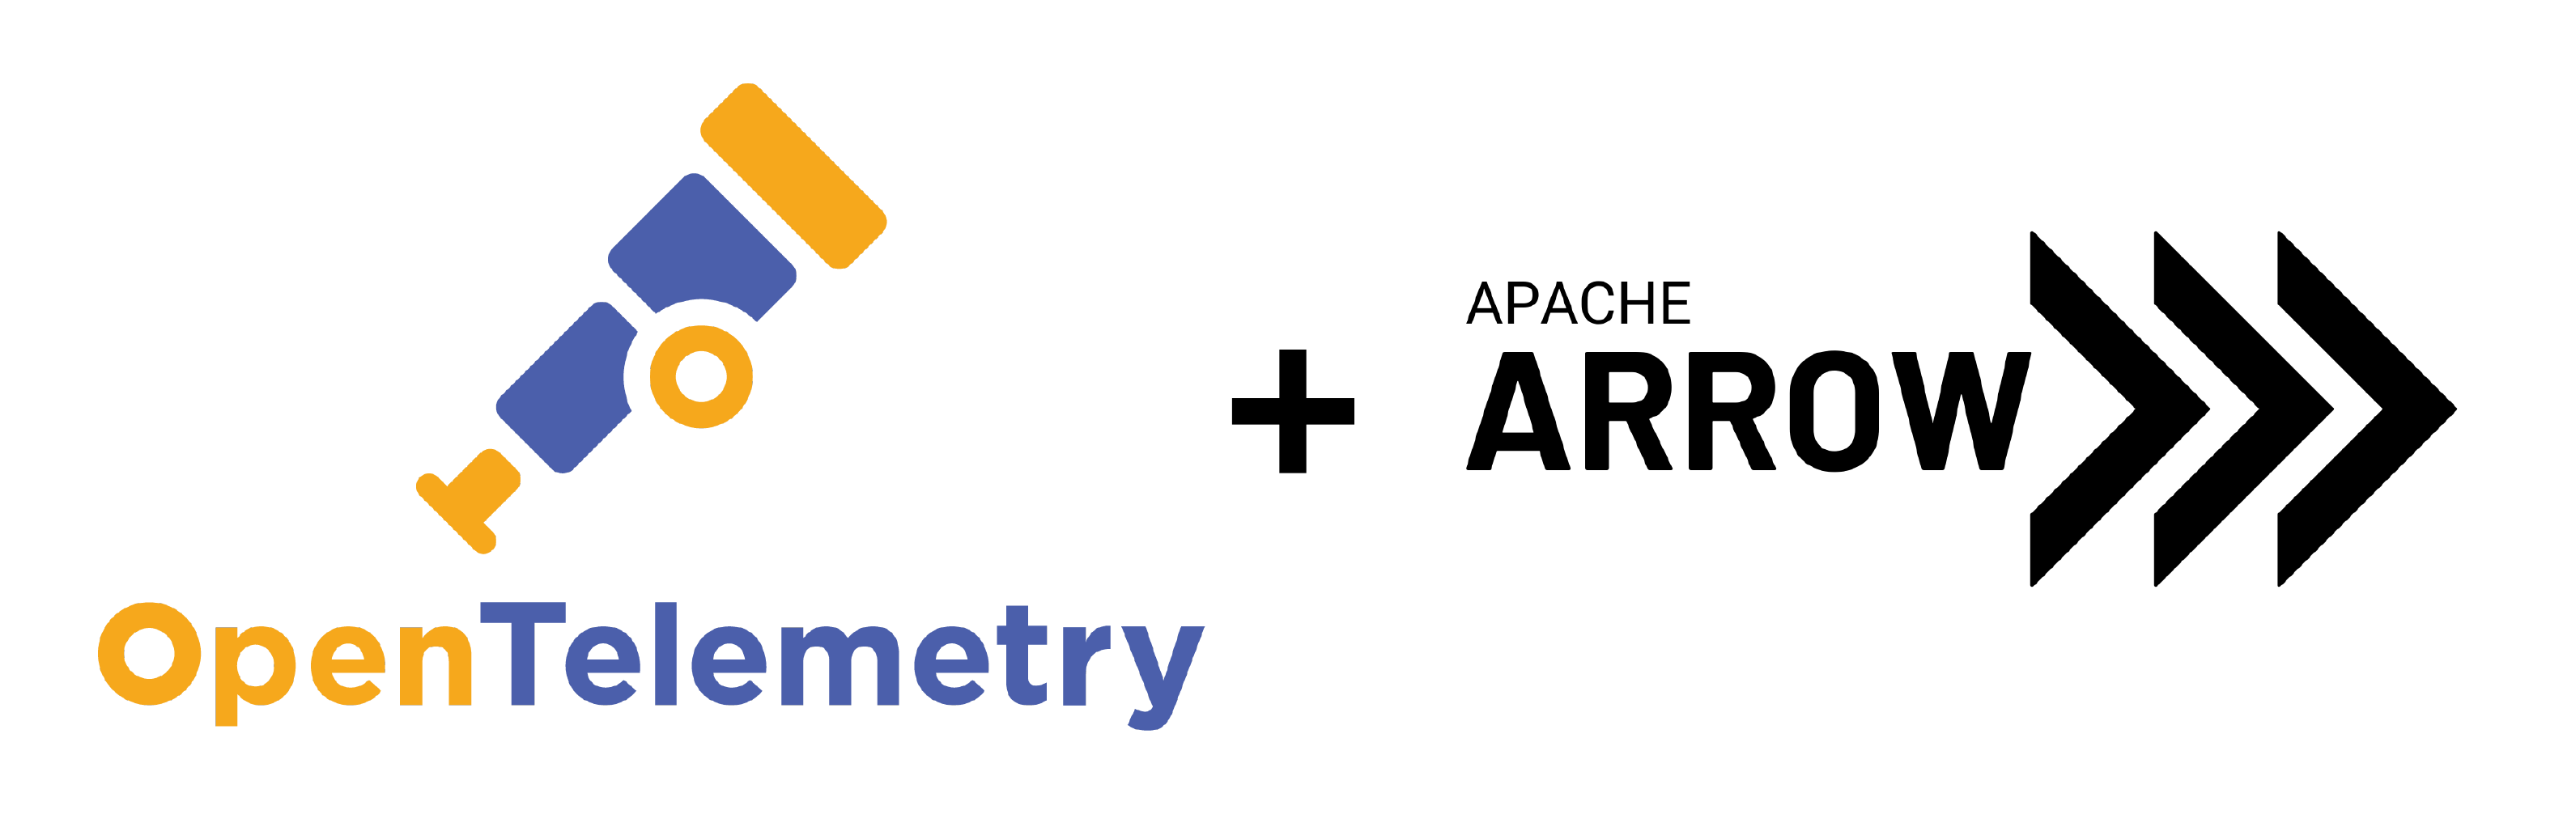 OpenTelemetry + Apache Arrow Logos